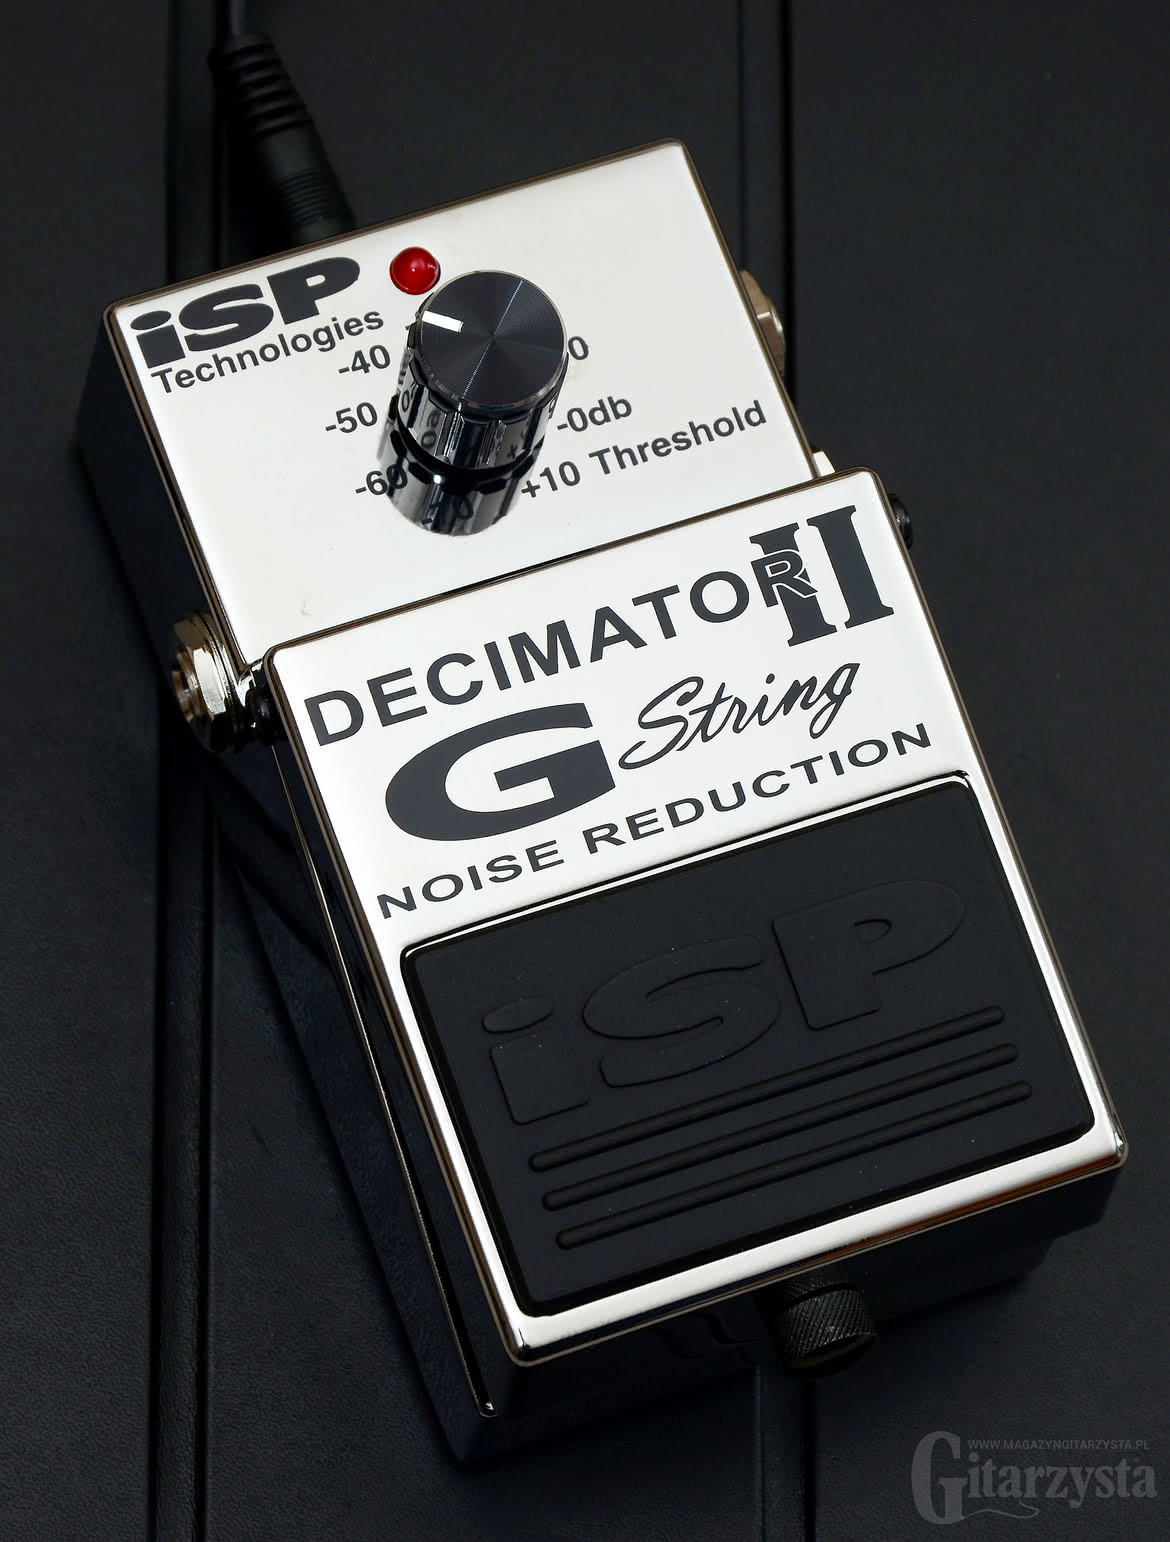 ISP Decimator II G-String